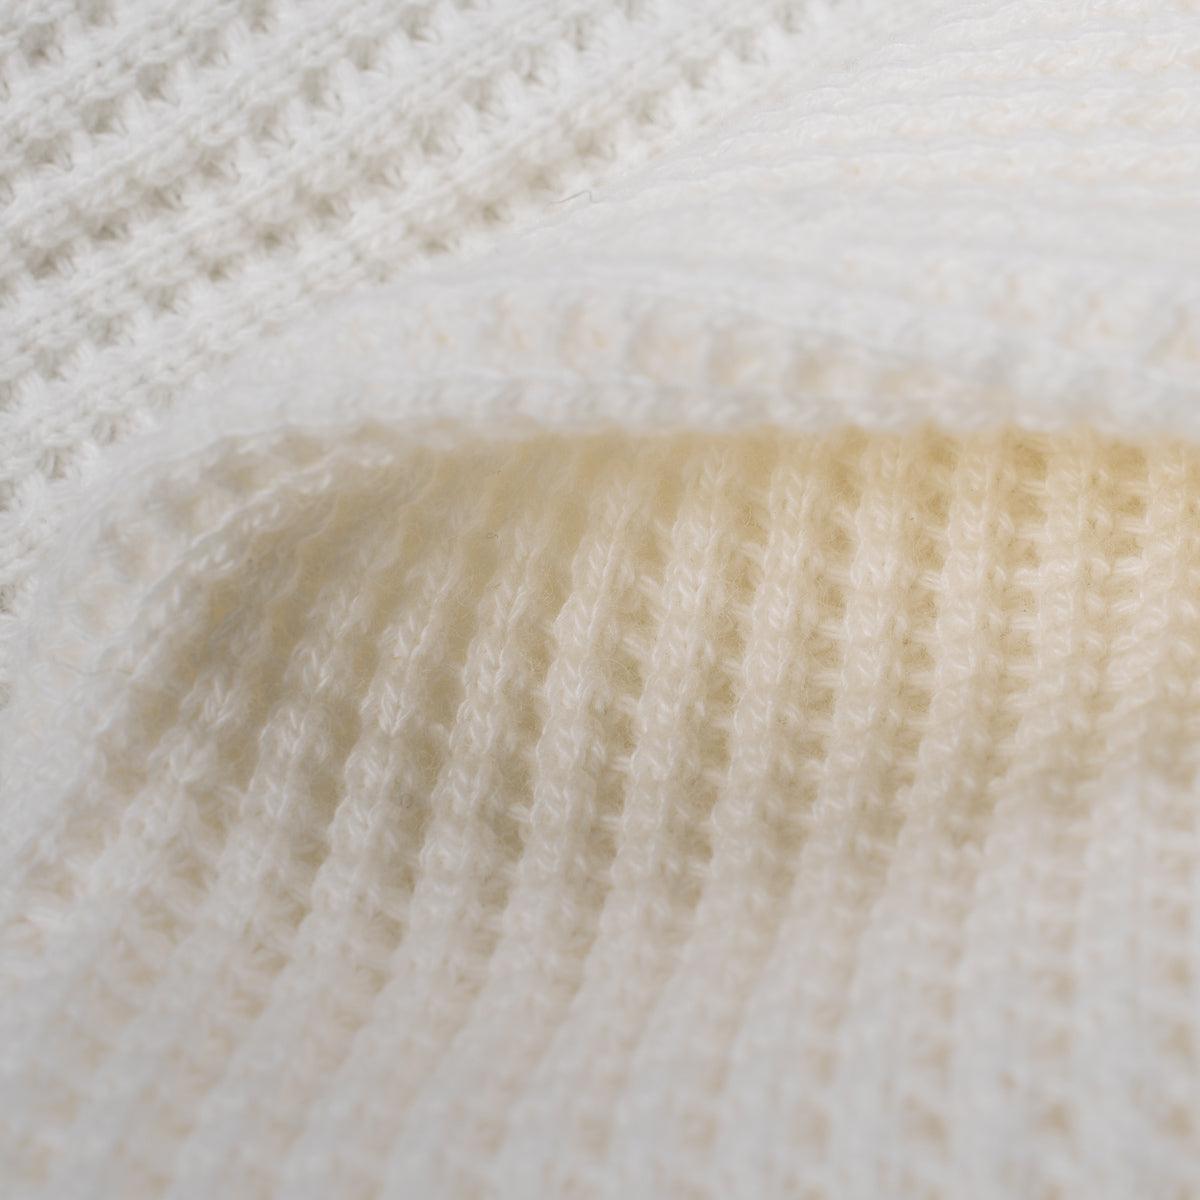 IHTL-1301-WHT - Waffle Knit Thermal Longsleeve White